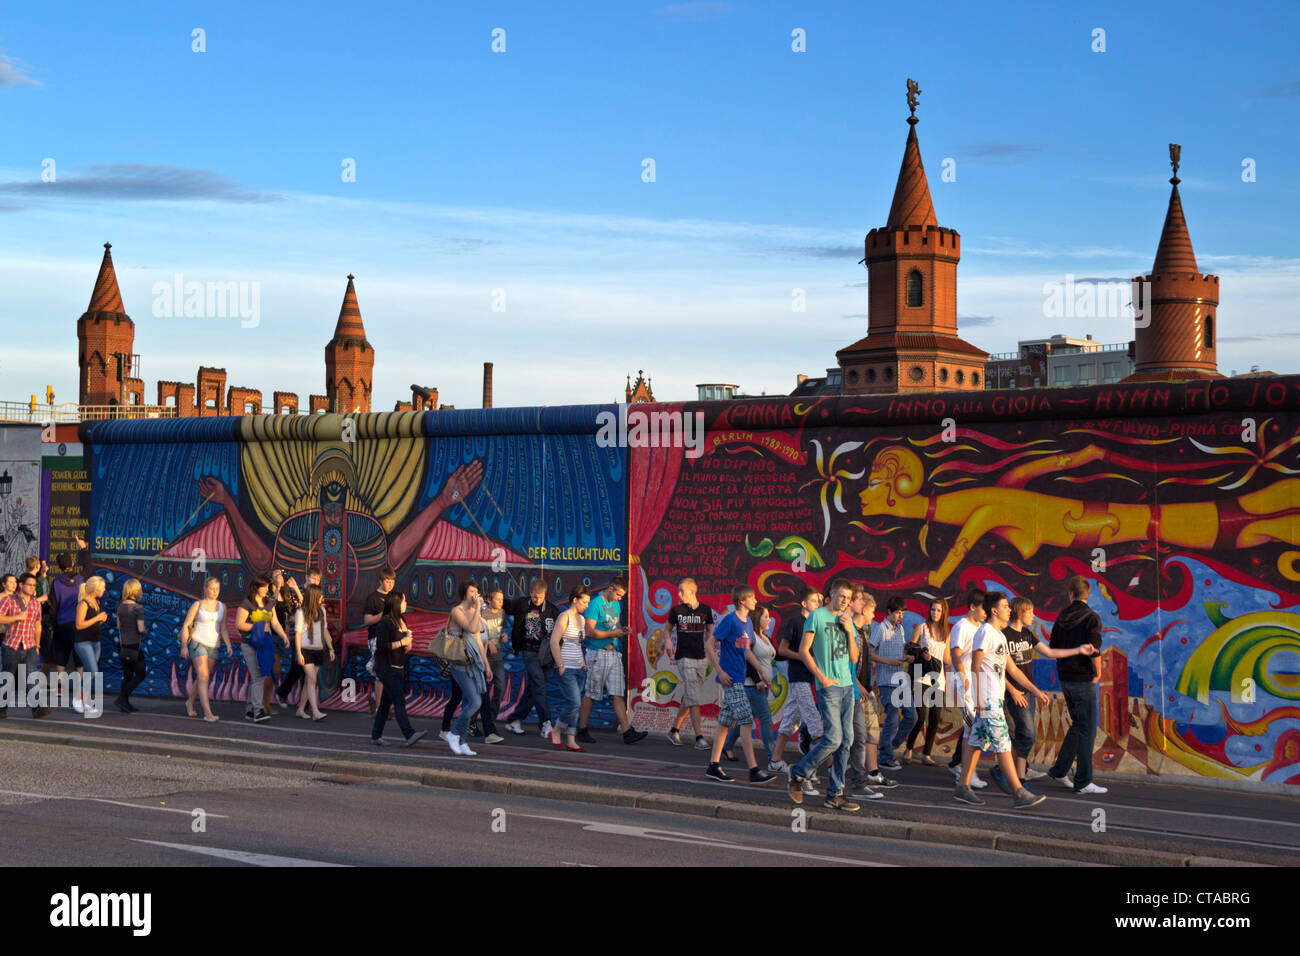 People in front of Berlin Wall mural, East Side Gallery, Berlin, Germany, Europe Stock Photo